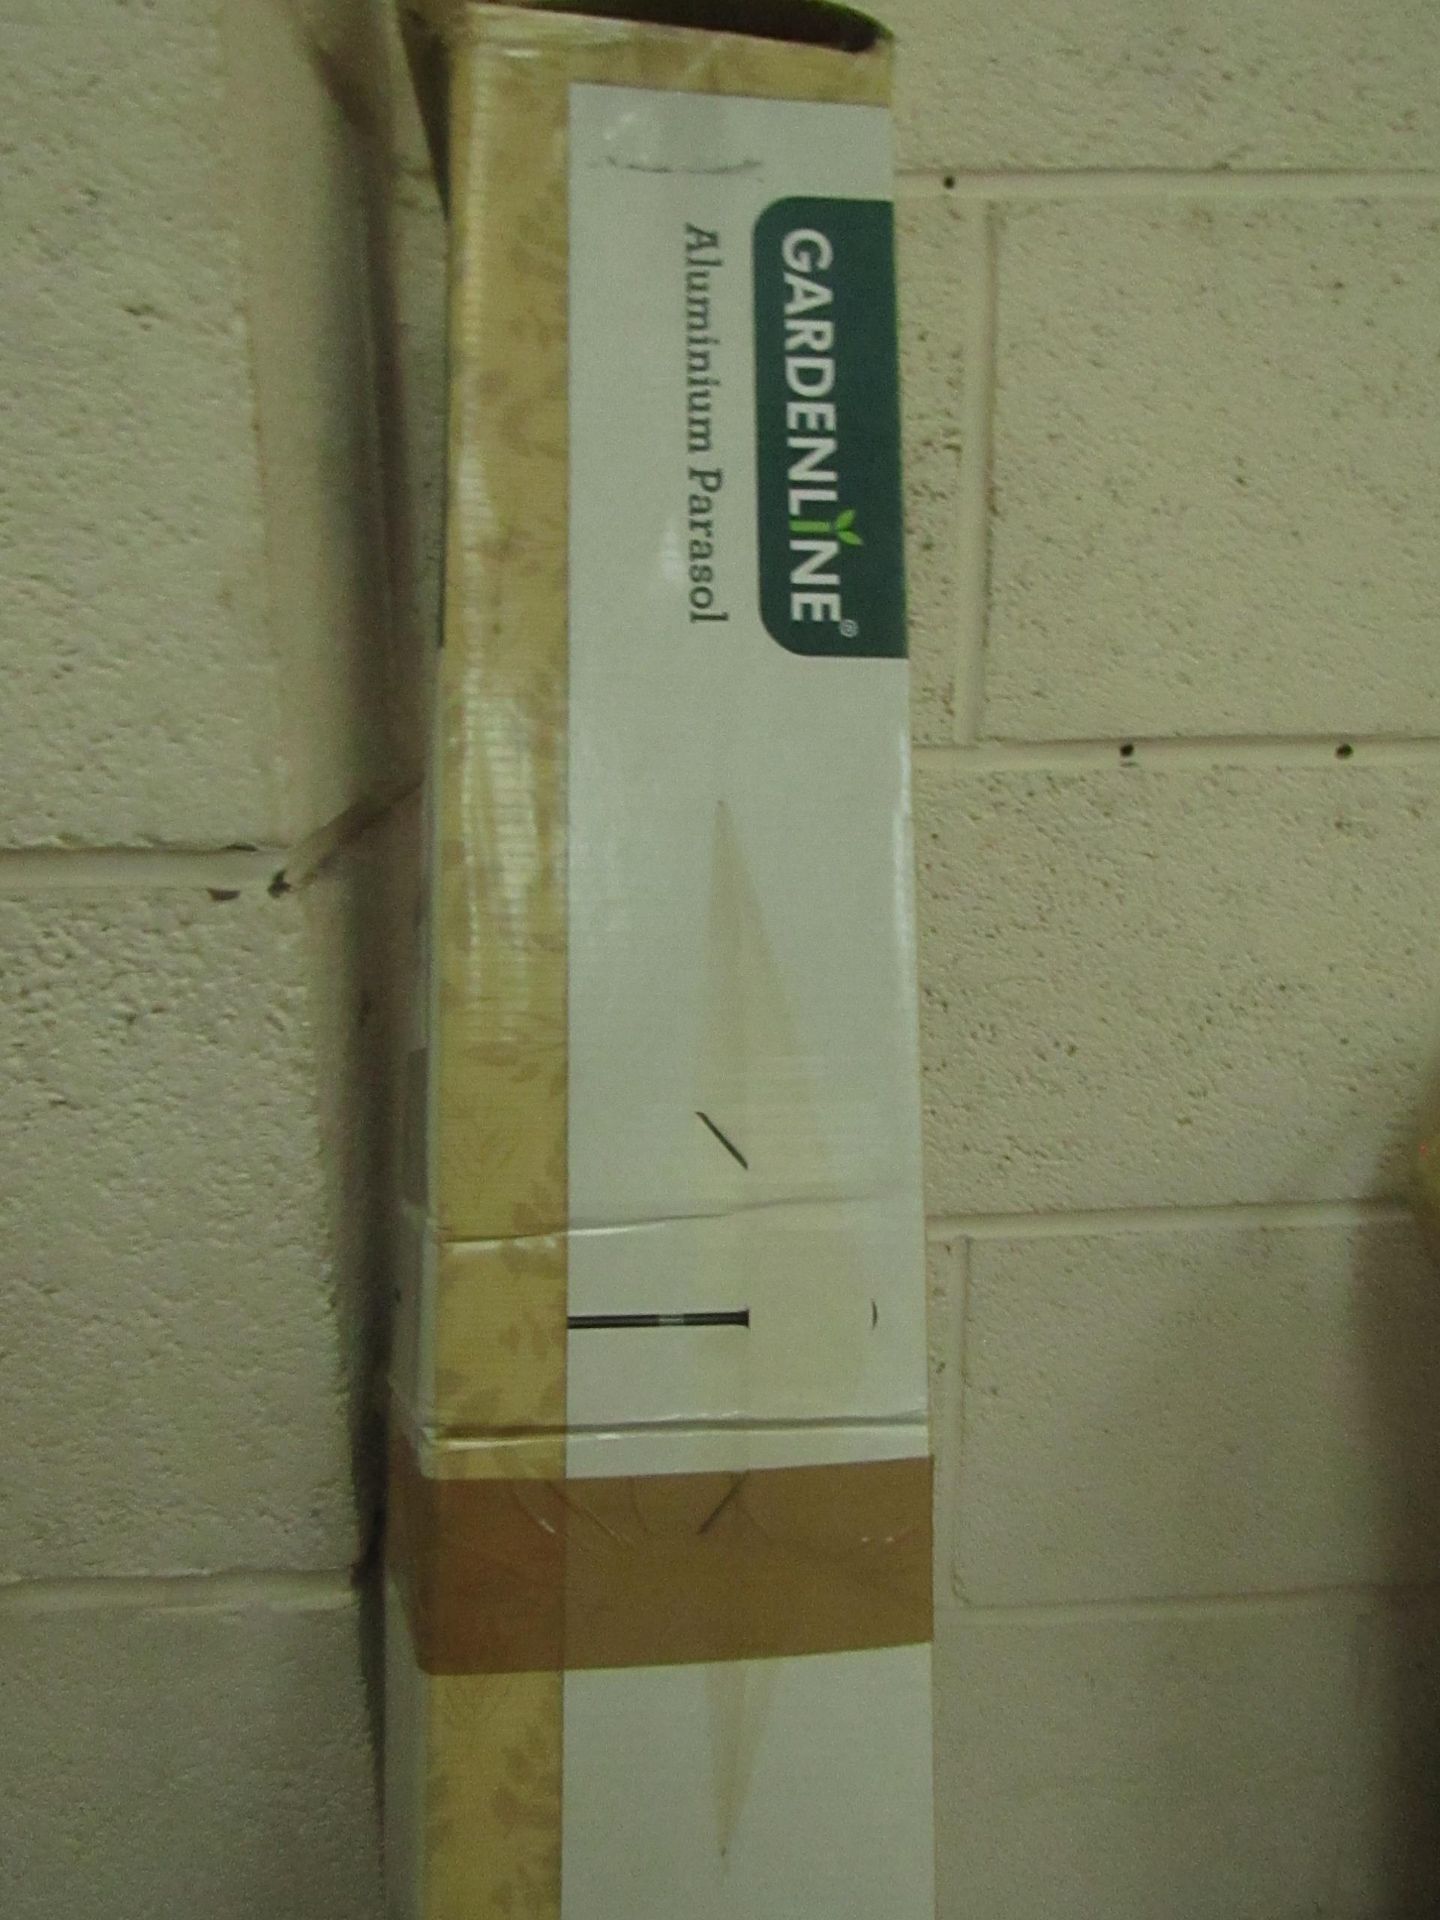 Gardenline Aluminium Parasol - Unchecked & Boxed - RRP £22.99.